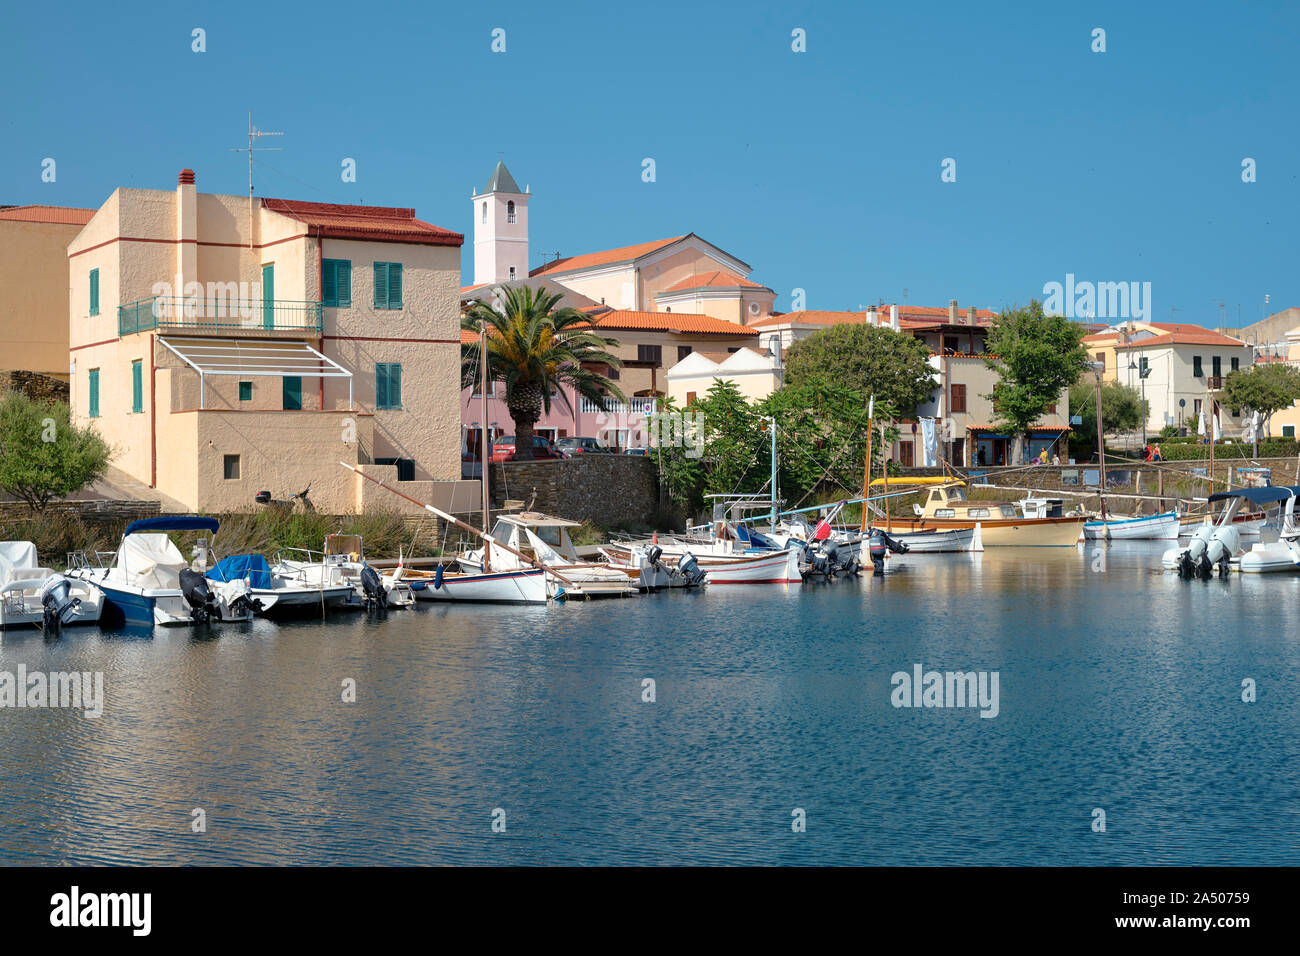 Porto di Stintino / The small harbour of Stintino a small town on the  northwest tip of the Italian island Sardinia Italy Europe Stock Photo -  Alamy